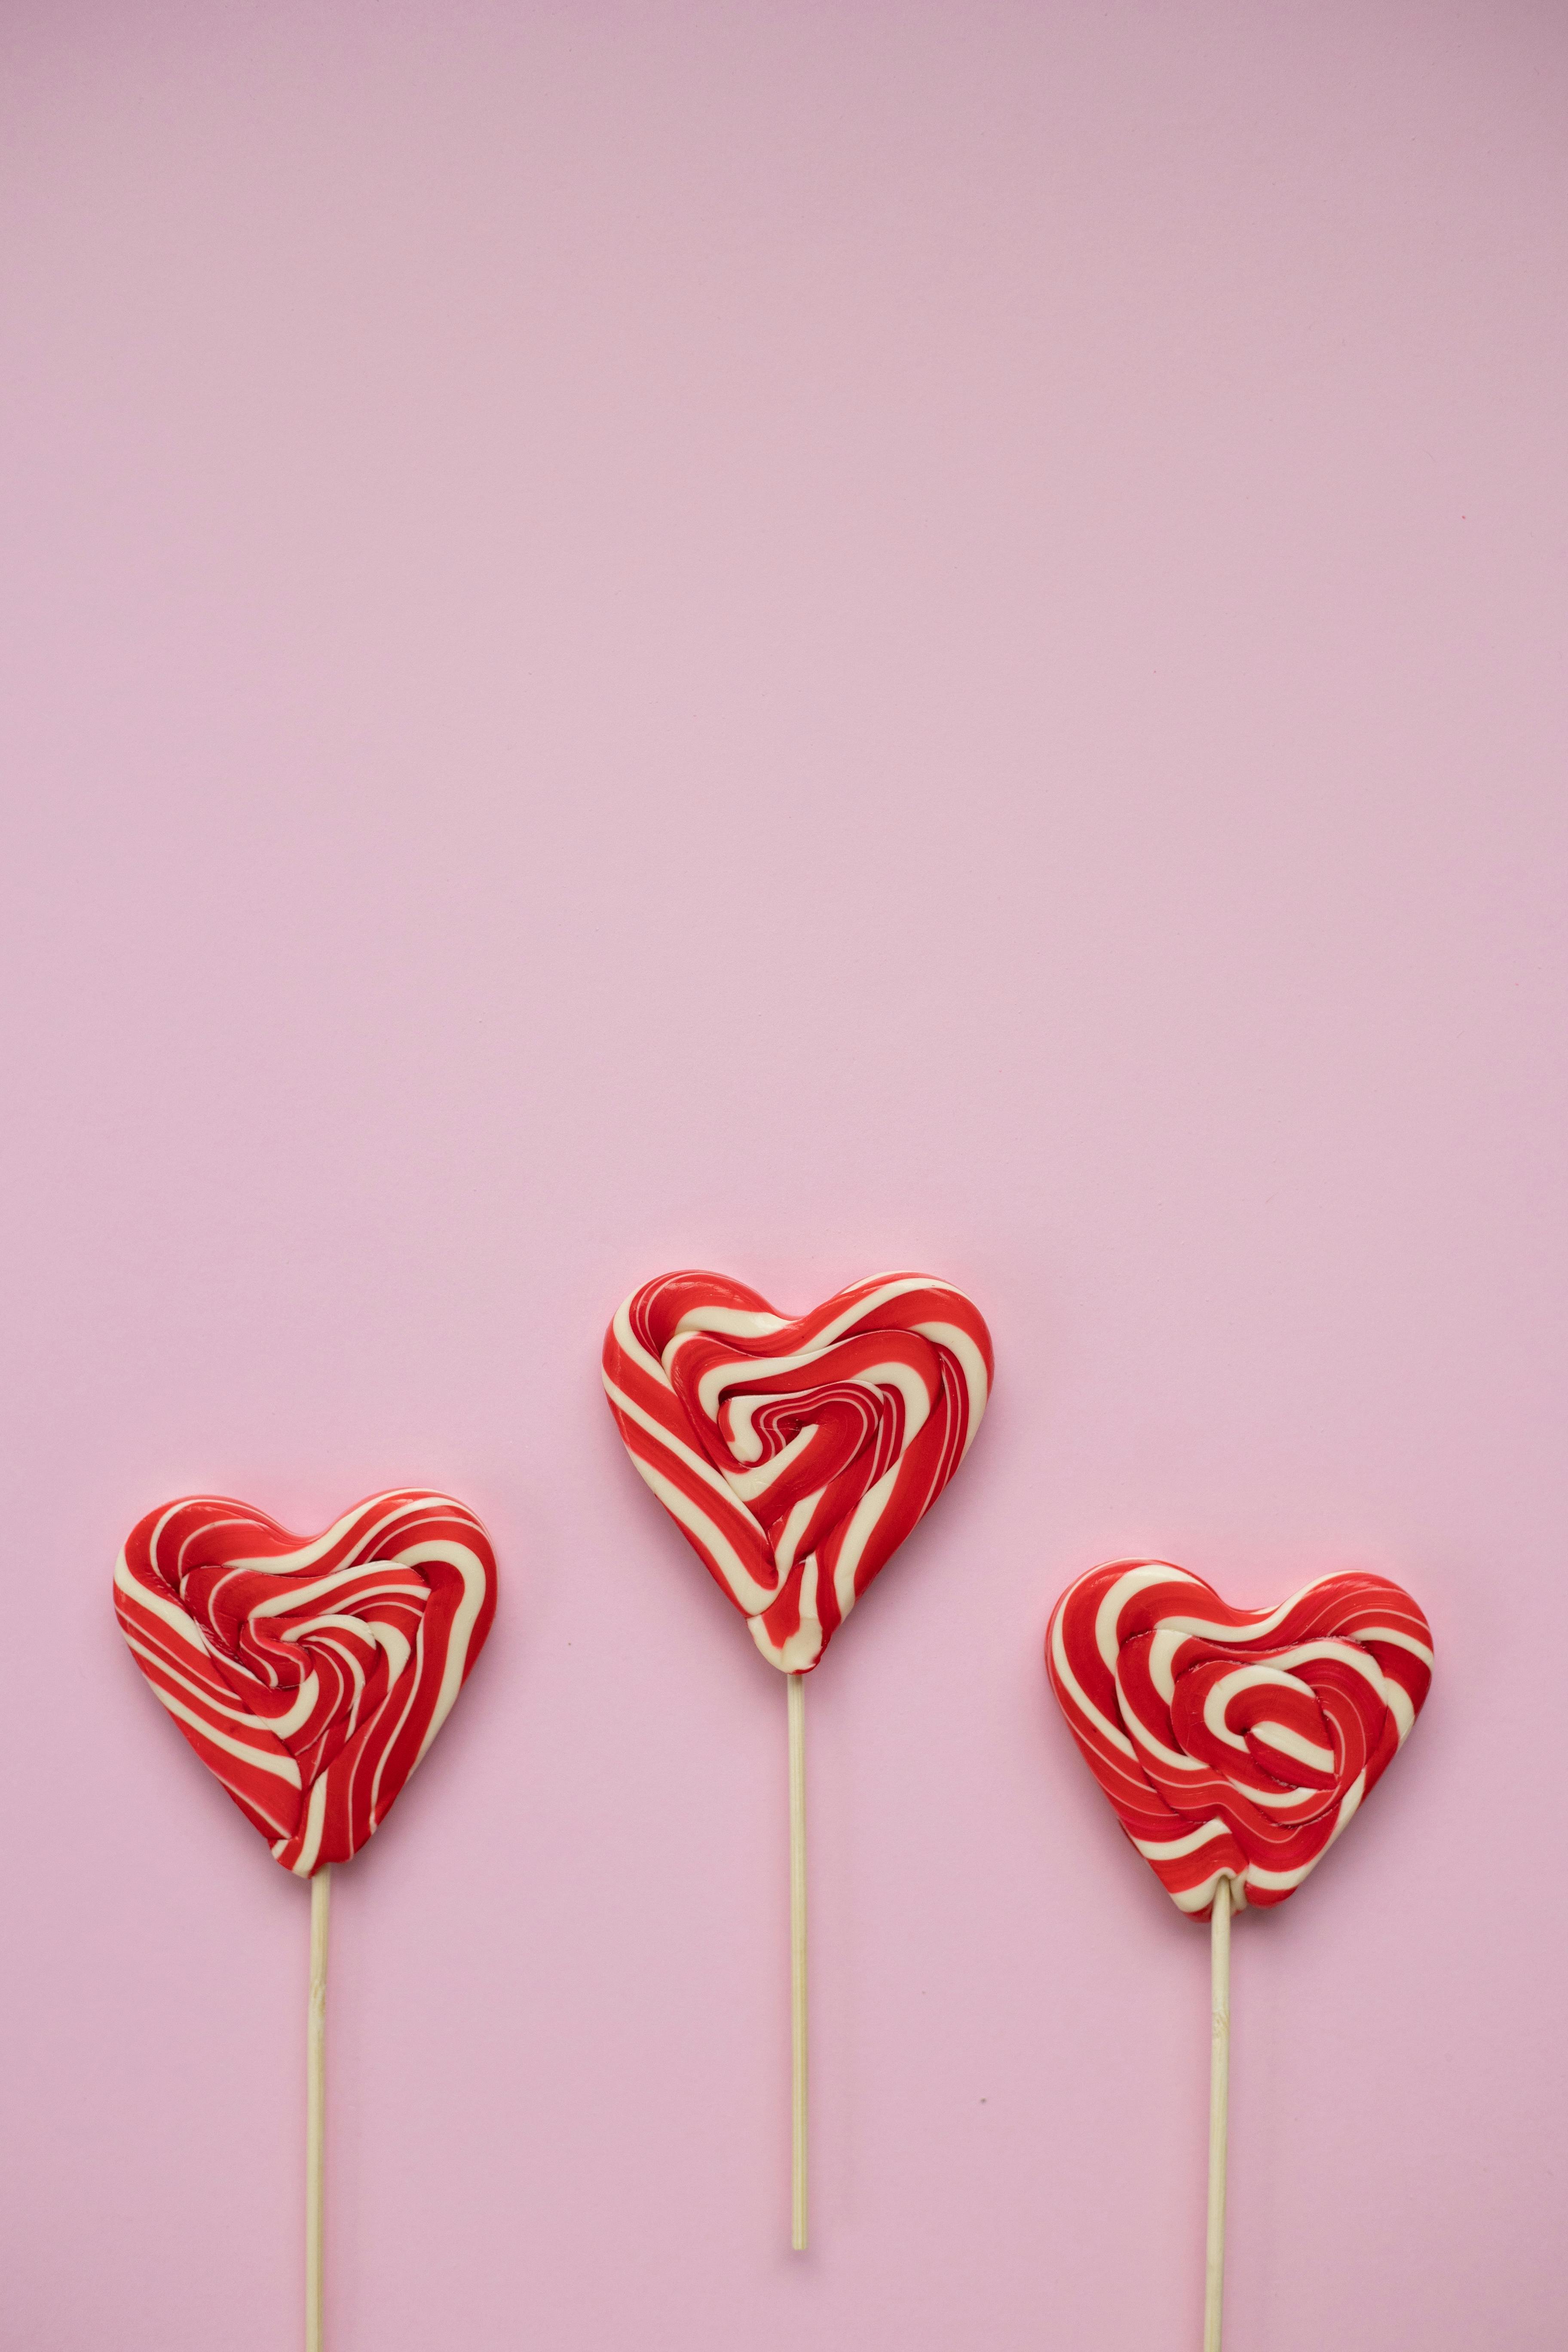 Desktop Wallpapers Dragee Candy Lollipop Food Many Sweets 640x960